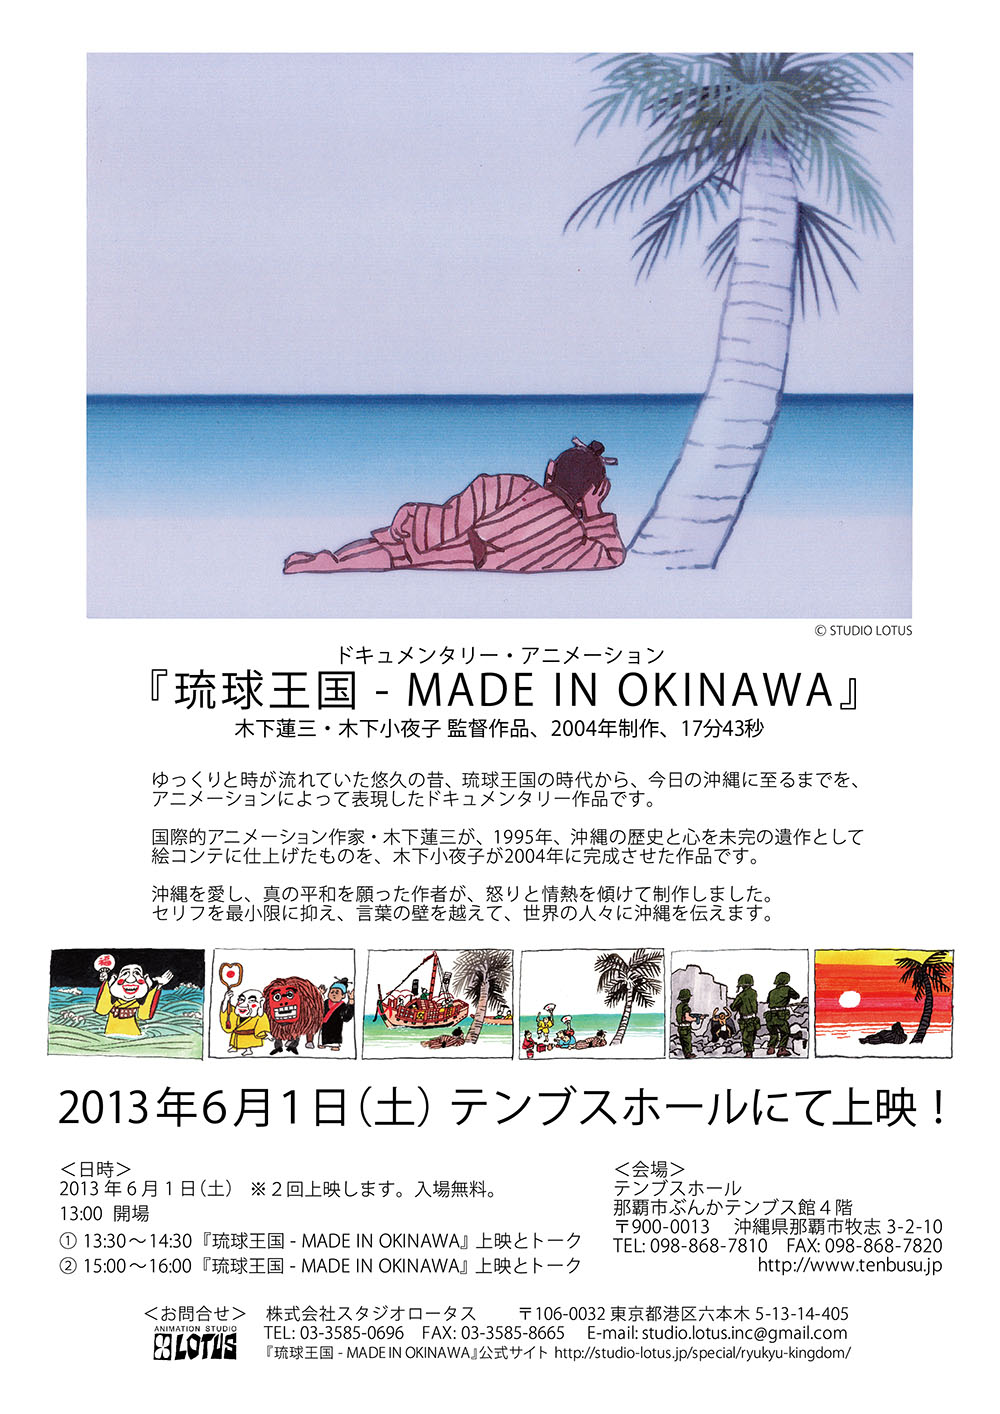 「琉球王国 - MADE IN OKINAWA」上映会 表面